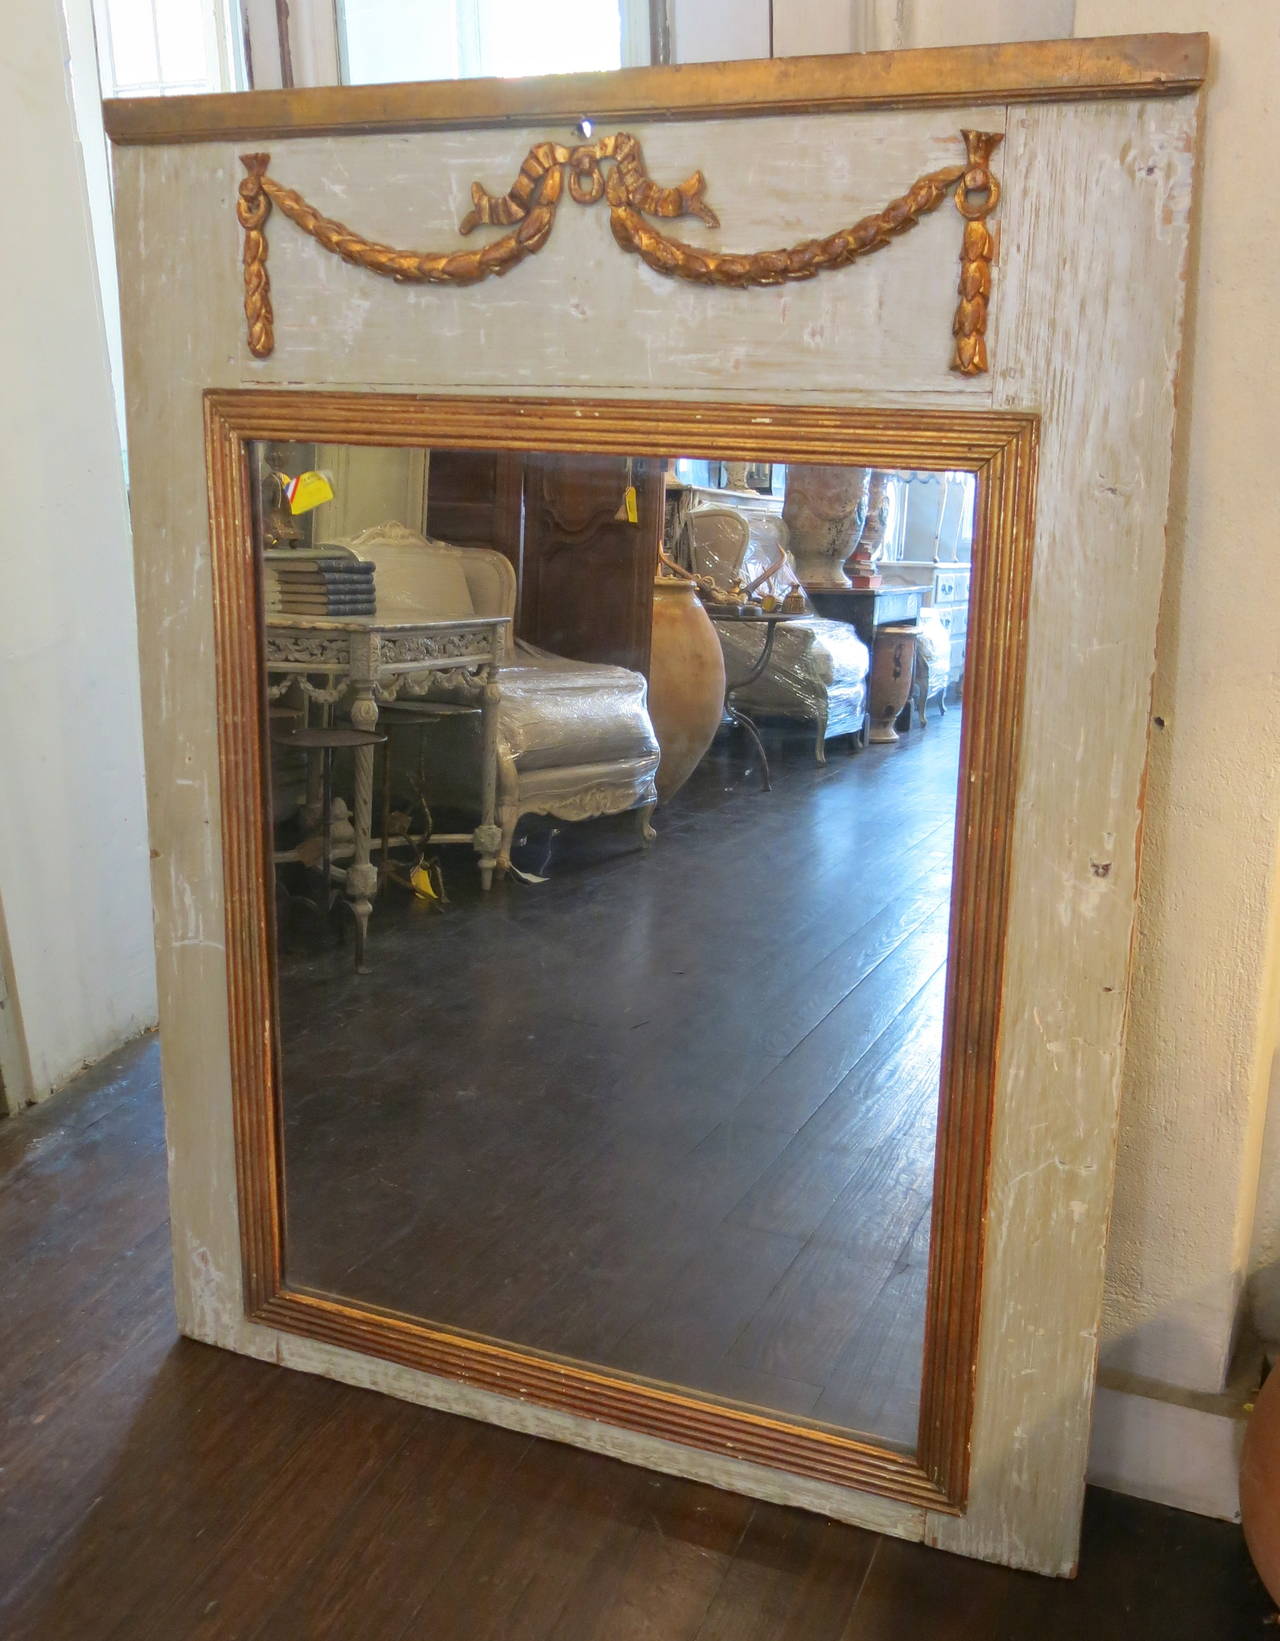 Rare 19th century period Directoire trumeau mirror with original carvings, original gilded frame, and original mercury glass.